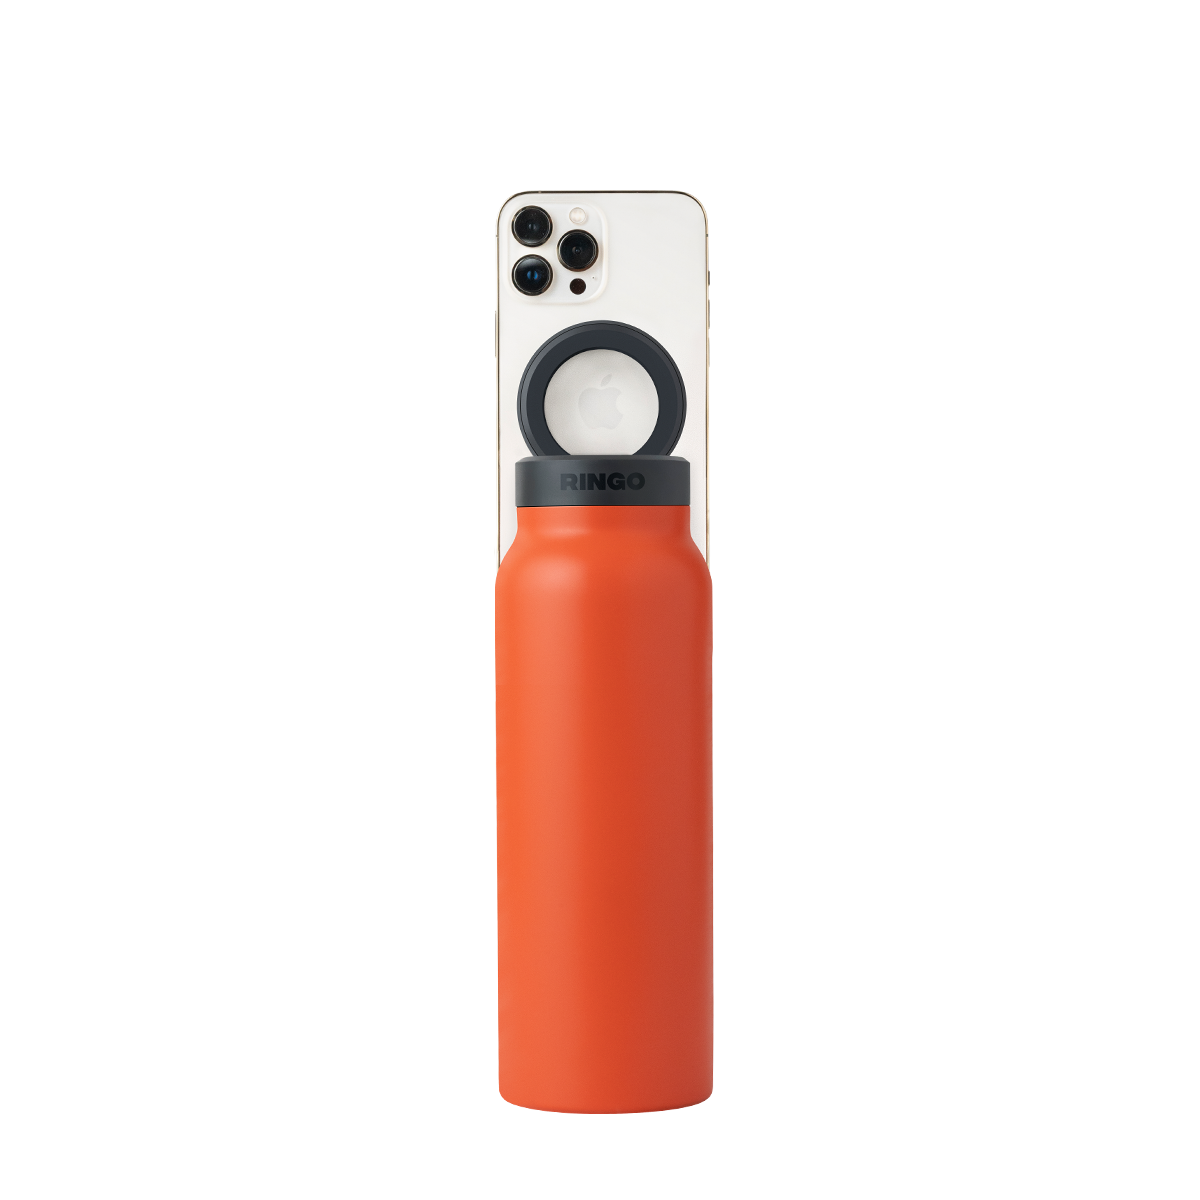 Ringo Water Bottle + Free Magnetic Booster Ring (Orange)